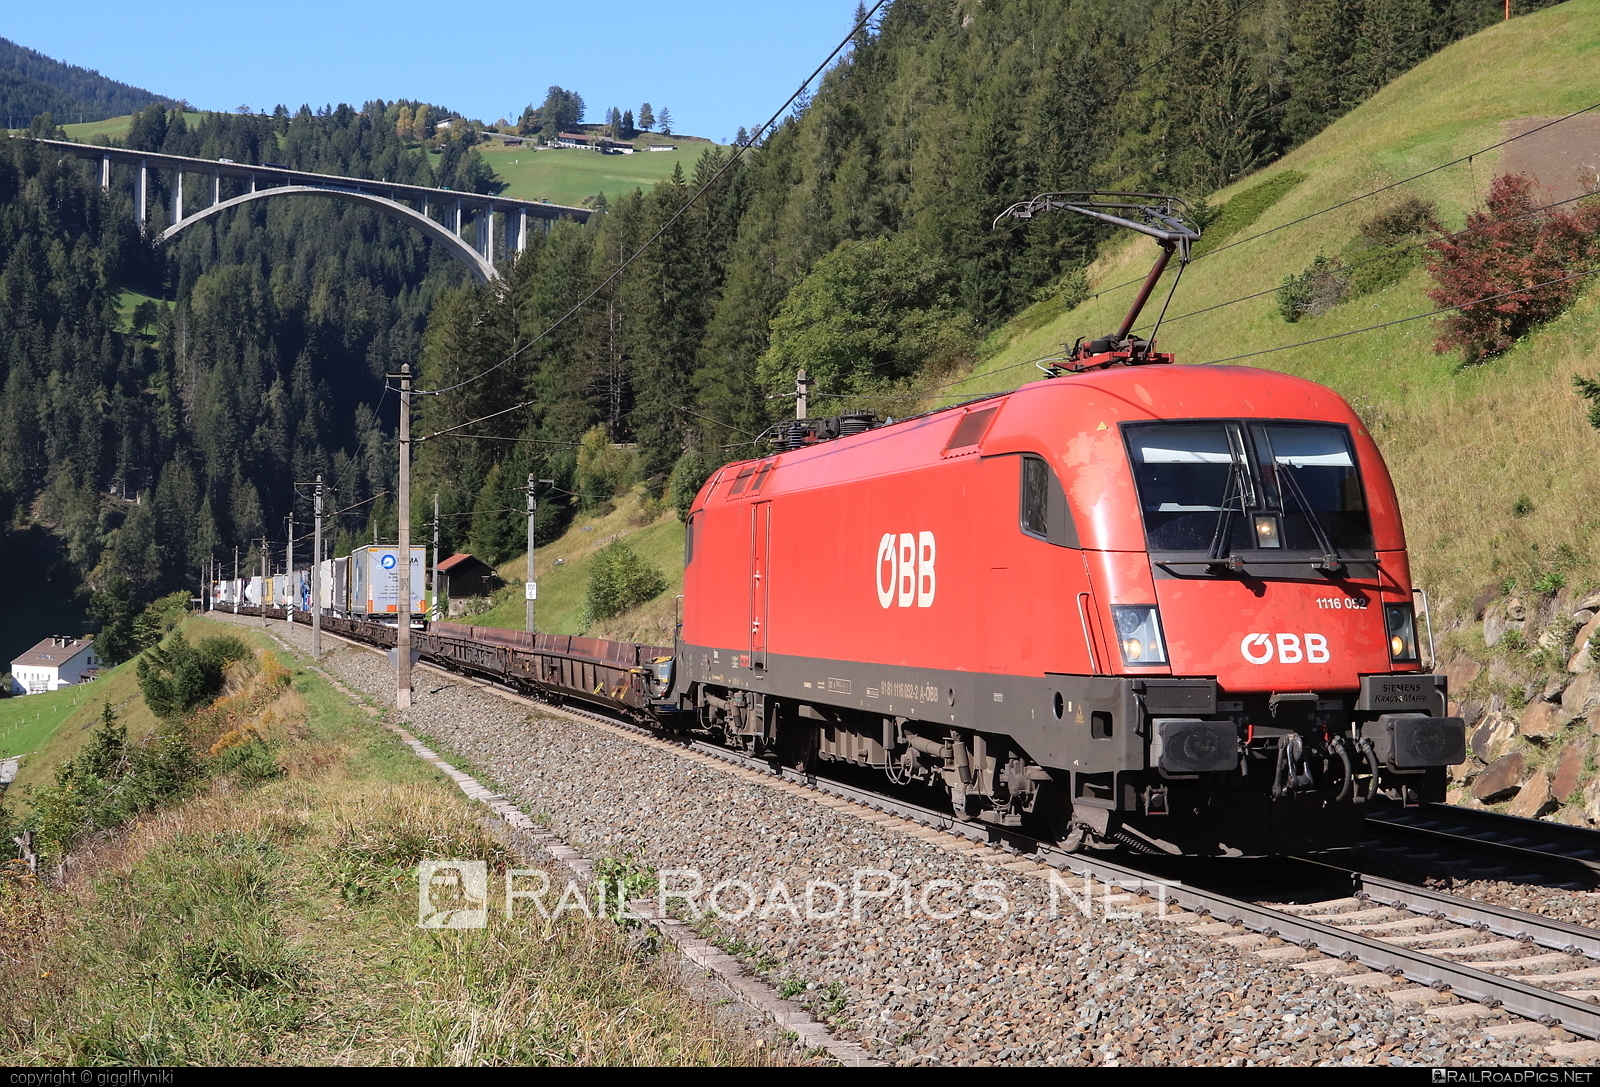 Siemens ES 64 U2 - 1116 052 operated by Rail Cargo Austria AG #es64 #es64u2 #eurosprinter #flatwagon #obb #osterreichischebundesbahnen #rcw #siemens #siemensEs64 #siemensEs64u2 #siemenstaurus #taurus #tauruslocomotive #truck